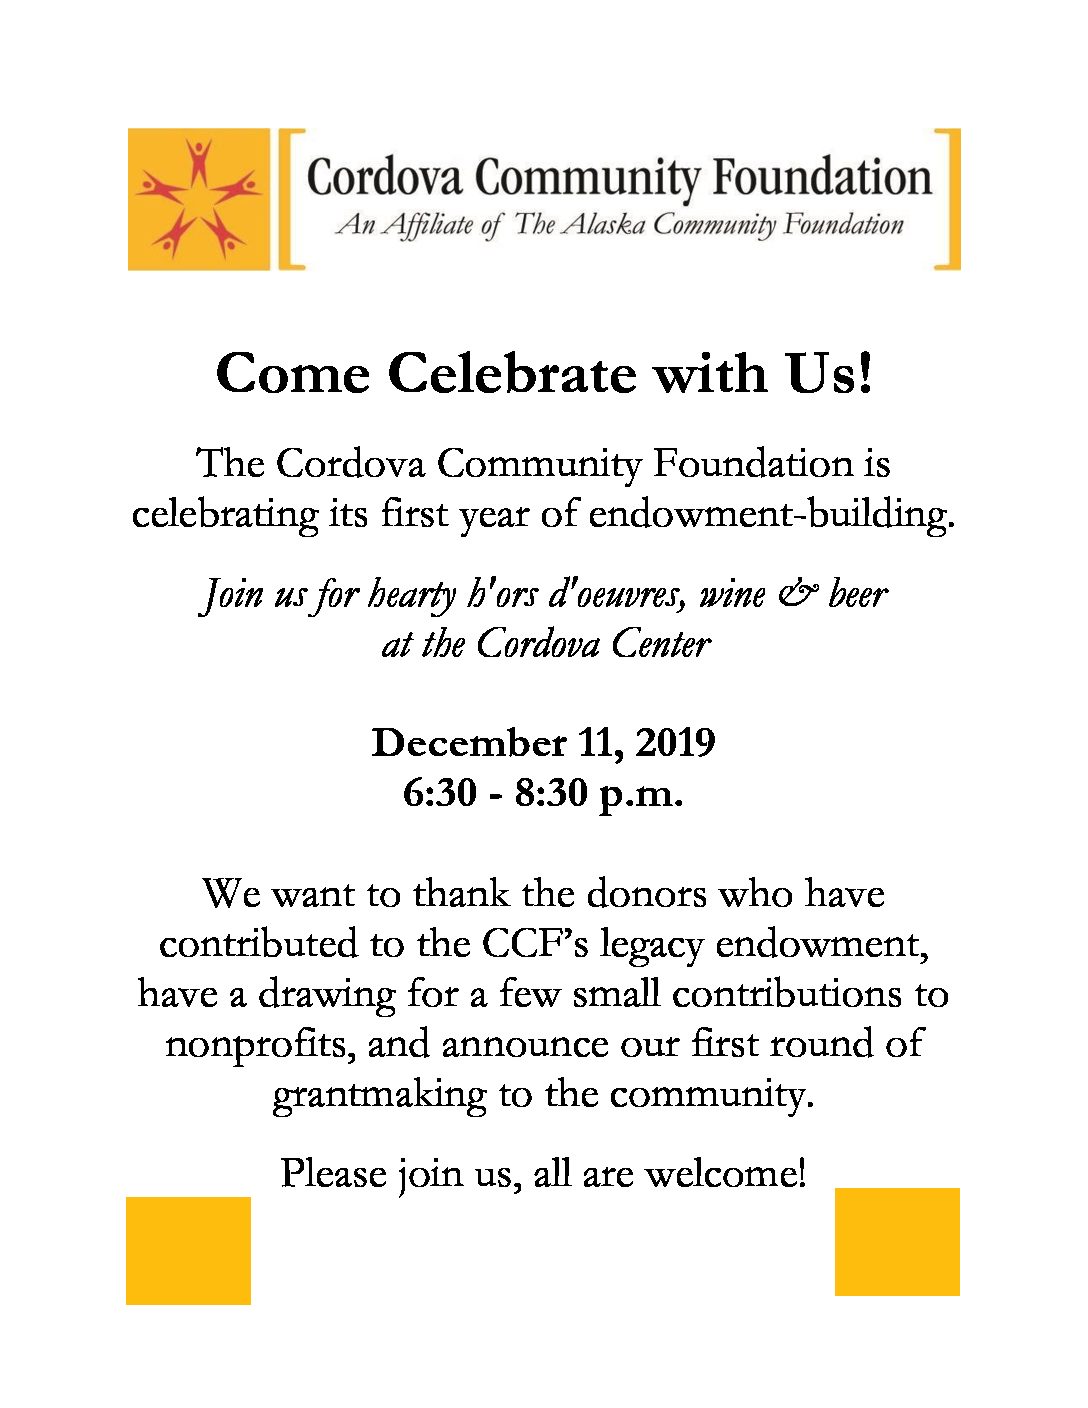 Cordova Community Foundation Celebration Mixer